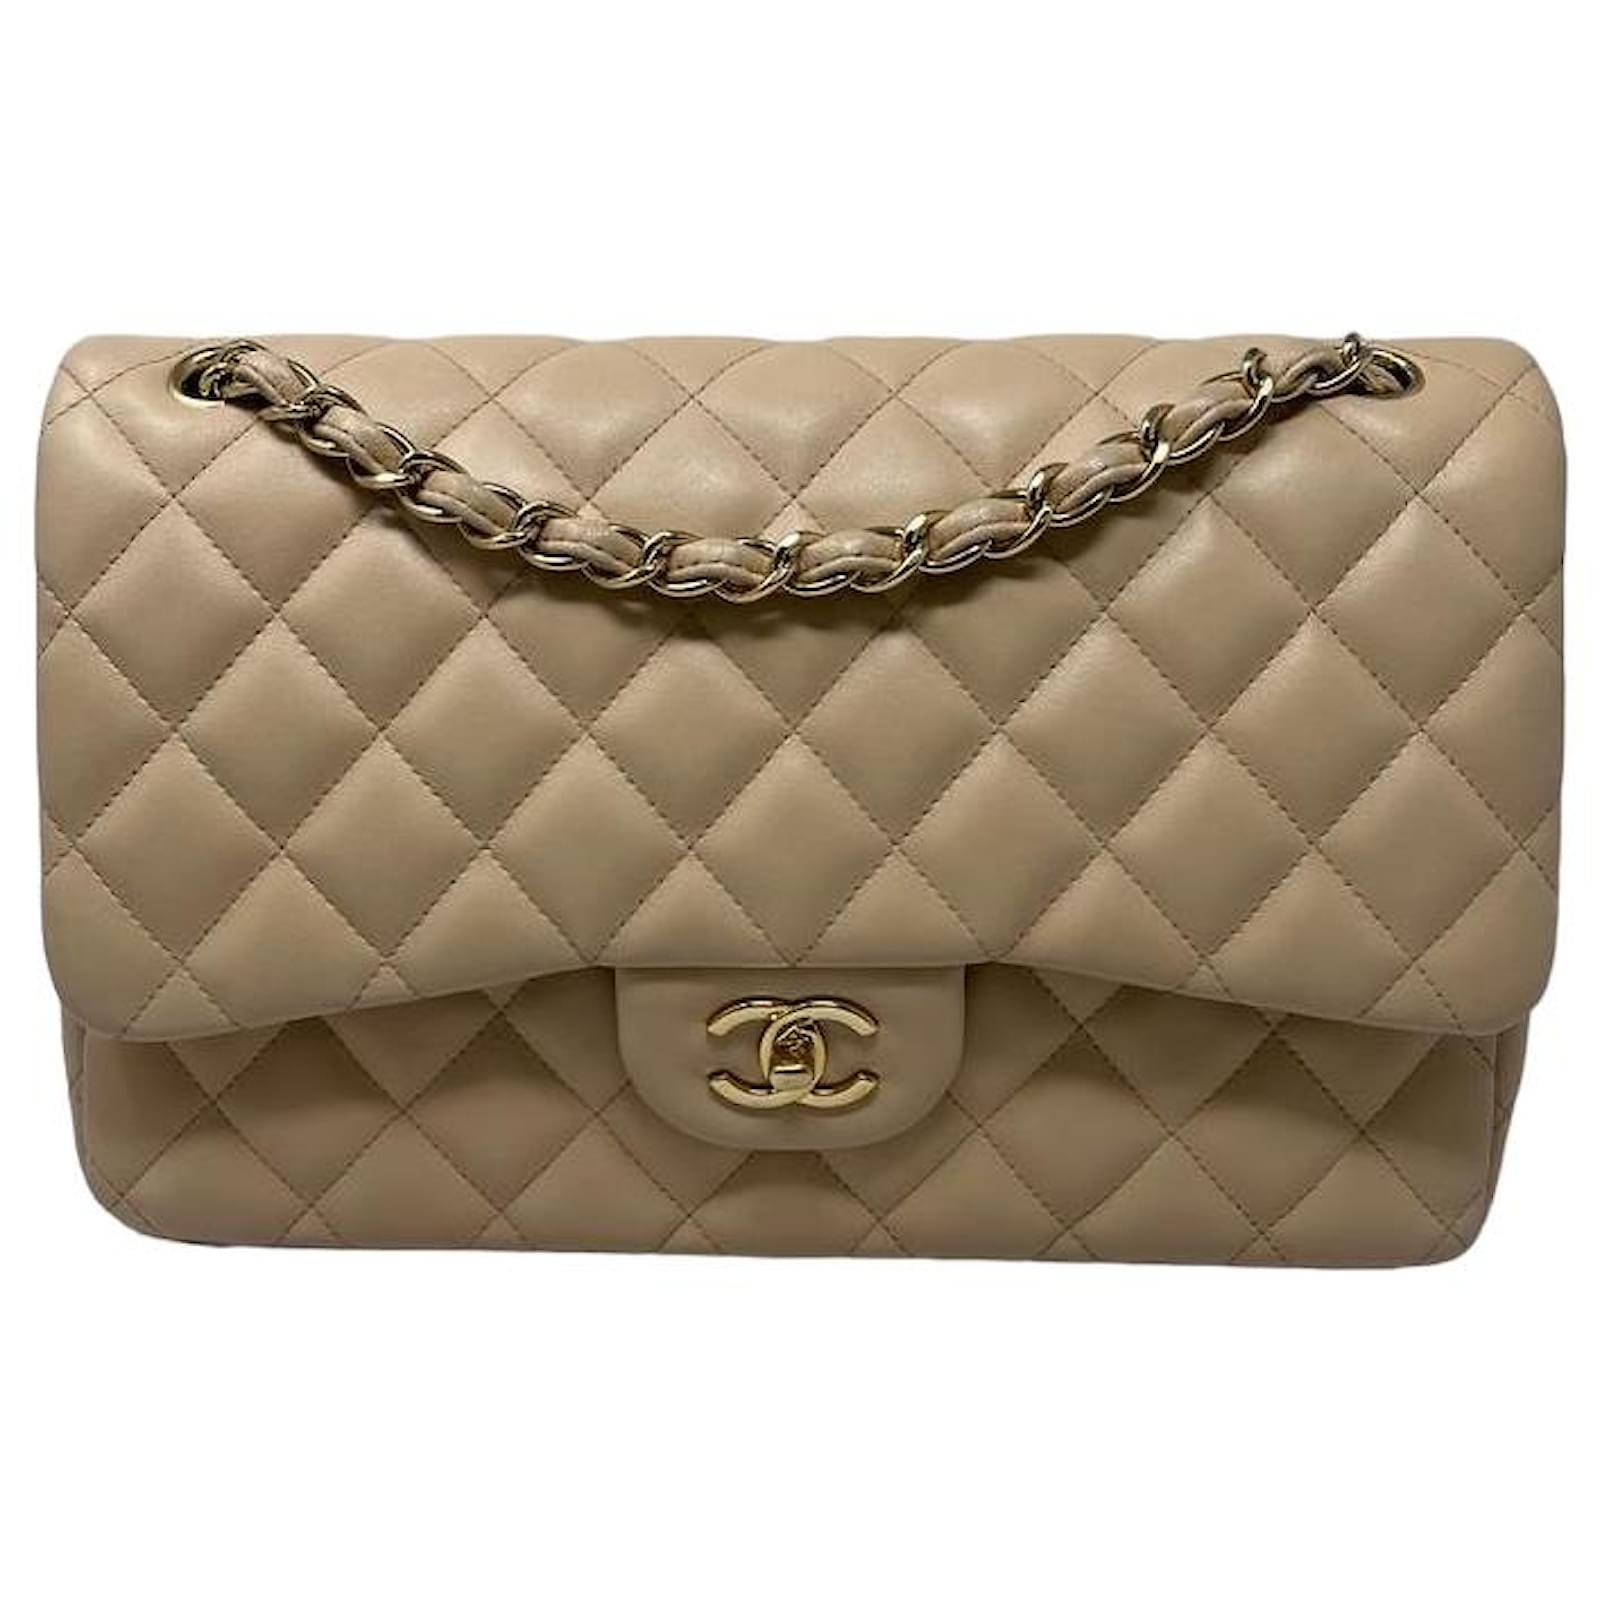 CHANEL, Bags, Chanel 9 Large Flapbag